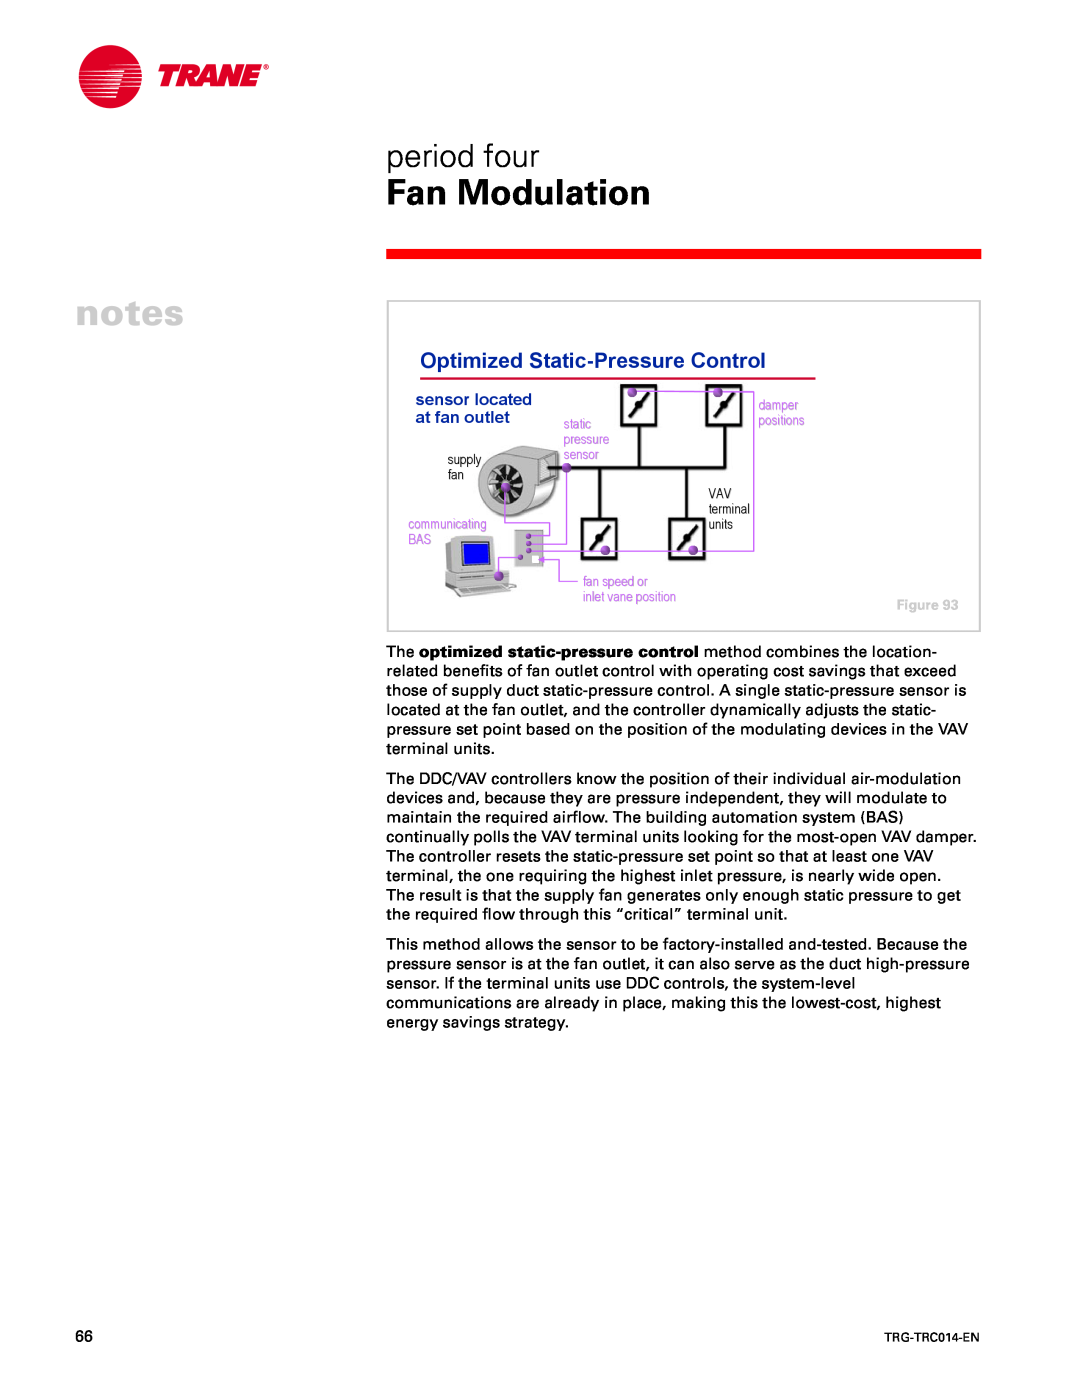 Trane TRG-TRC014-EN manual Optimized Static-PressureControl, Fan Modulation, period four, sensor located, at fan outlet 